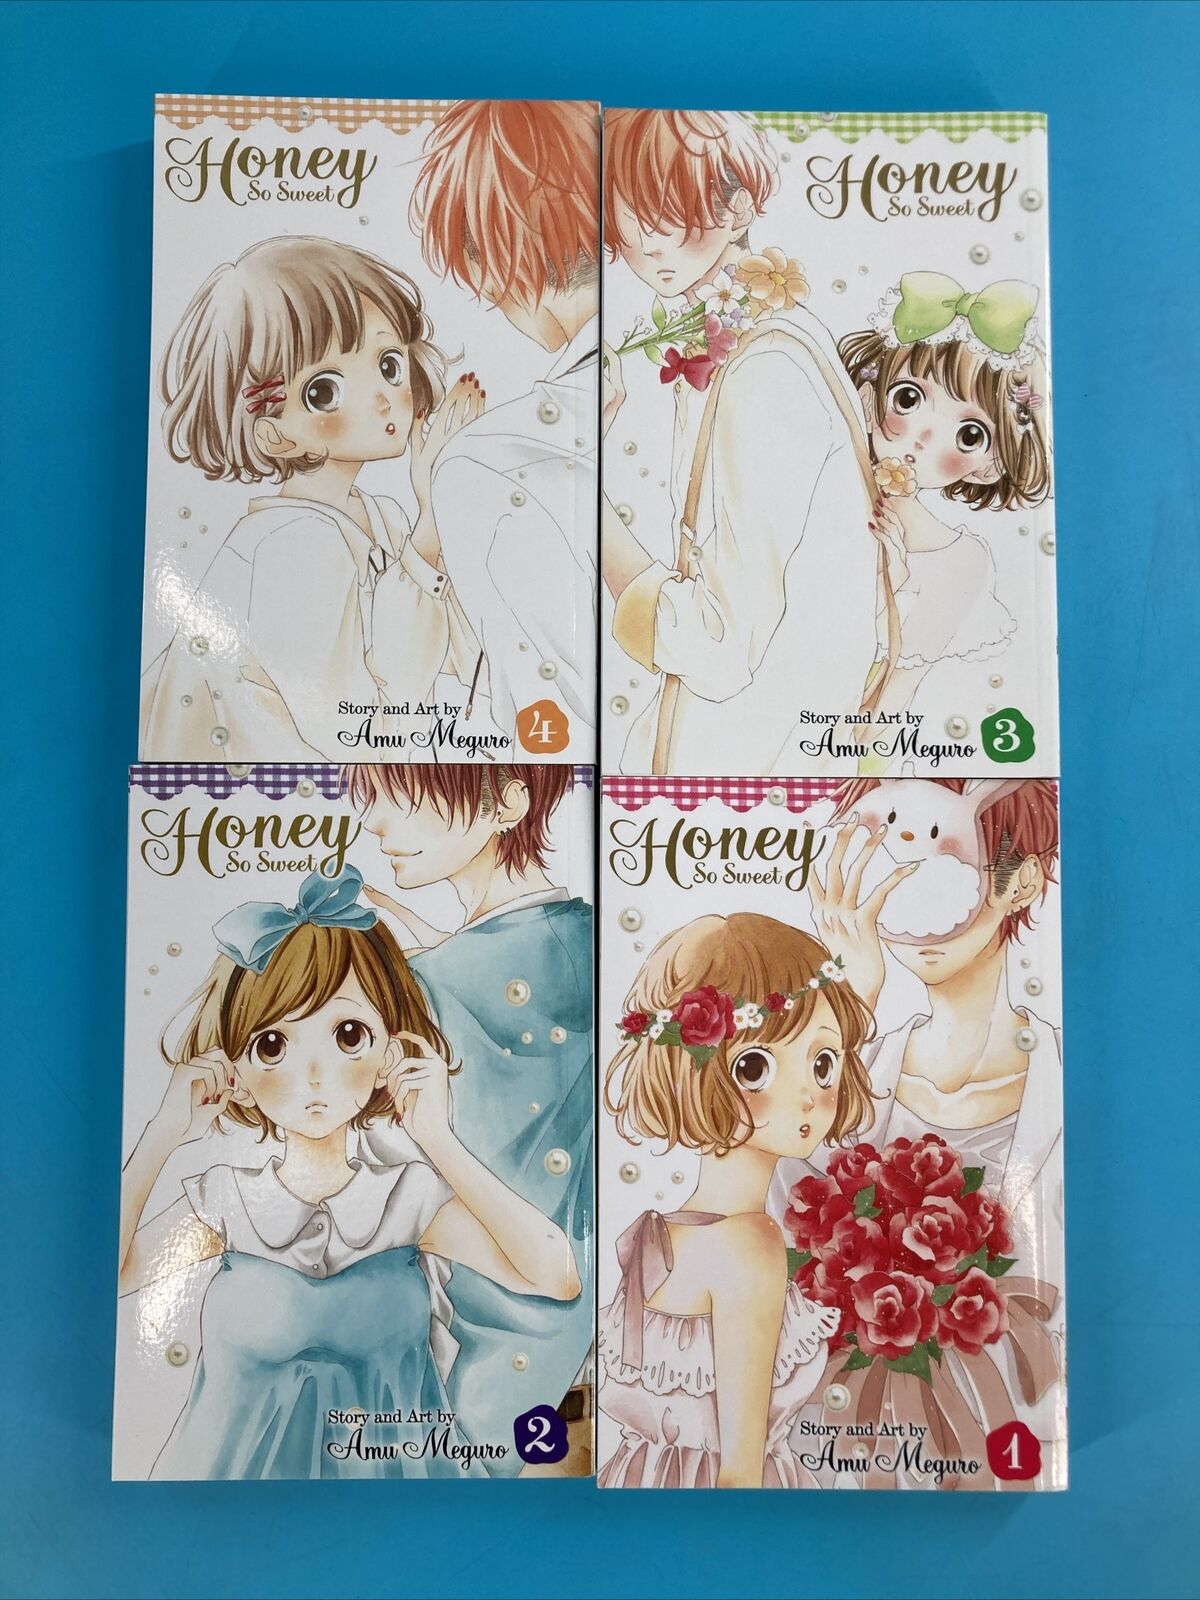 Honey So Sweet Manga - Volumes 1-4  GOOD CONDITION